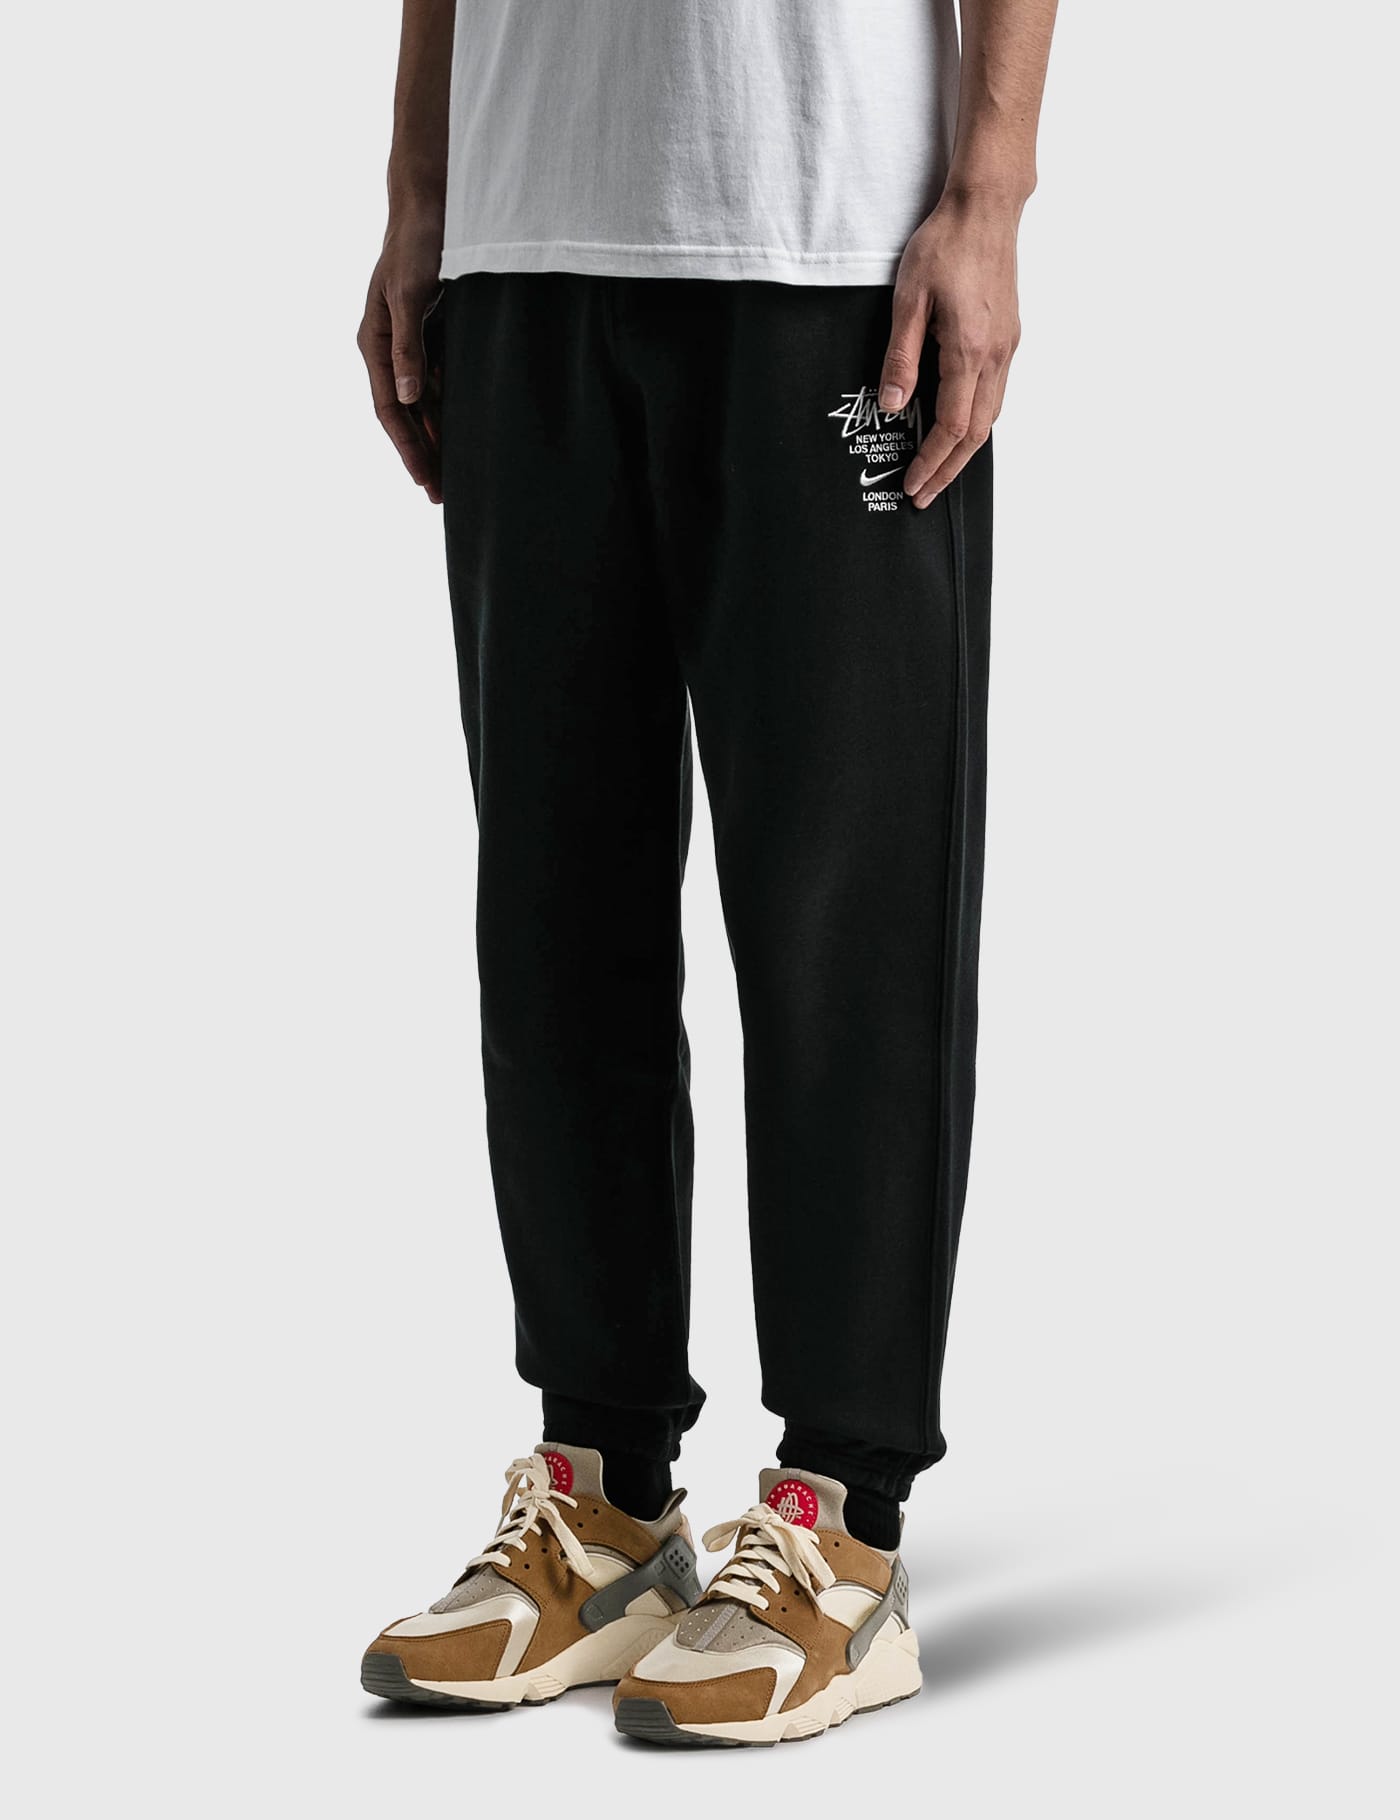 Nike - Stussy x Nike Fleece Pants | HBX - Globally Curated Fashion 